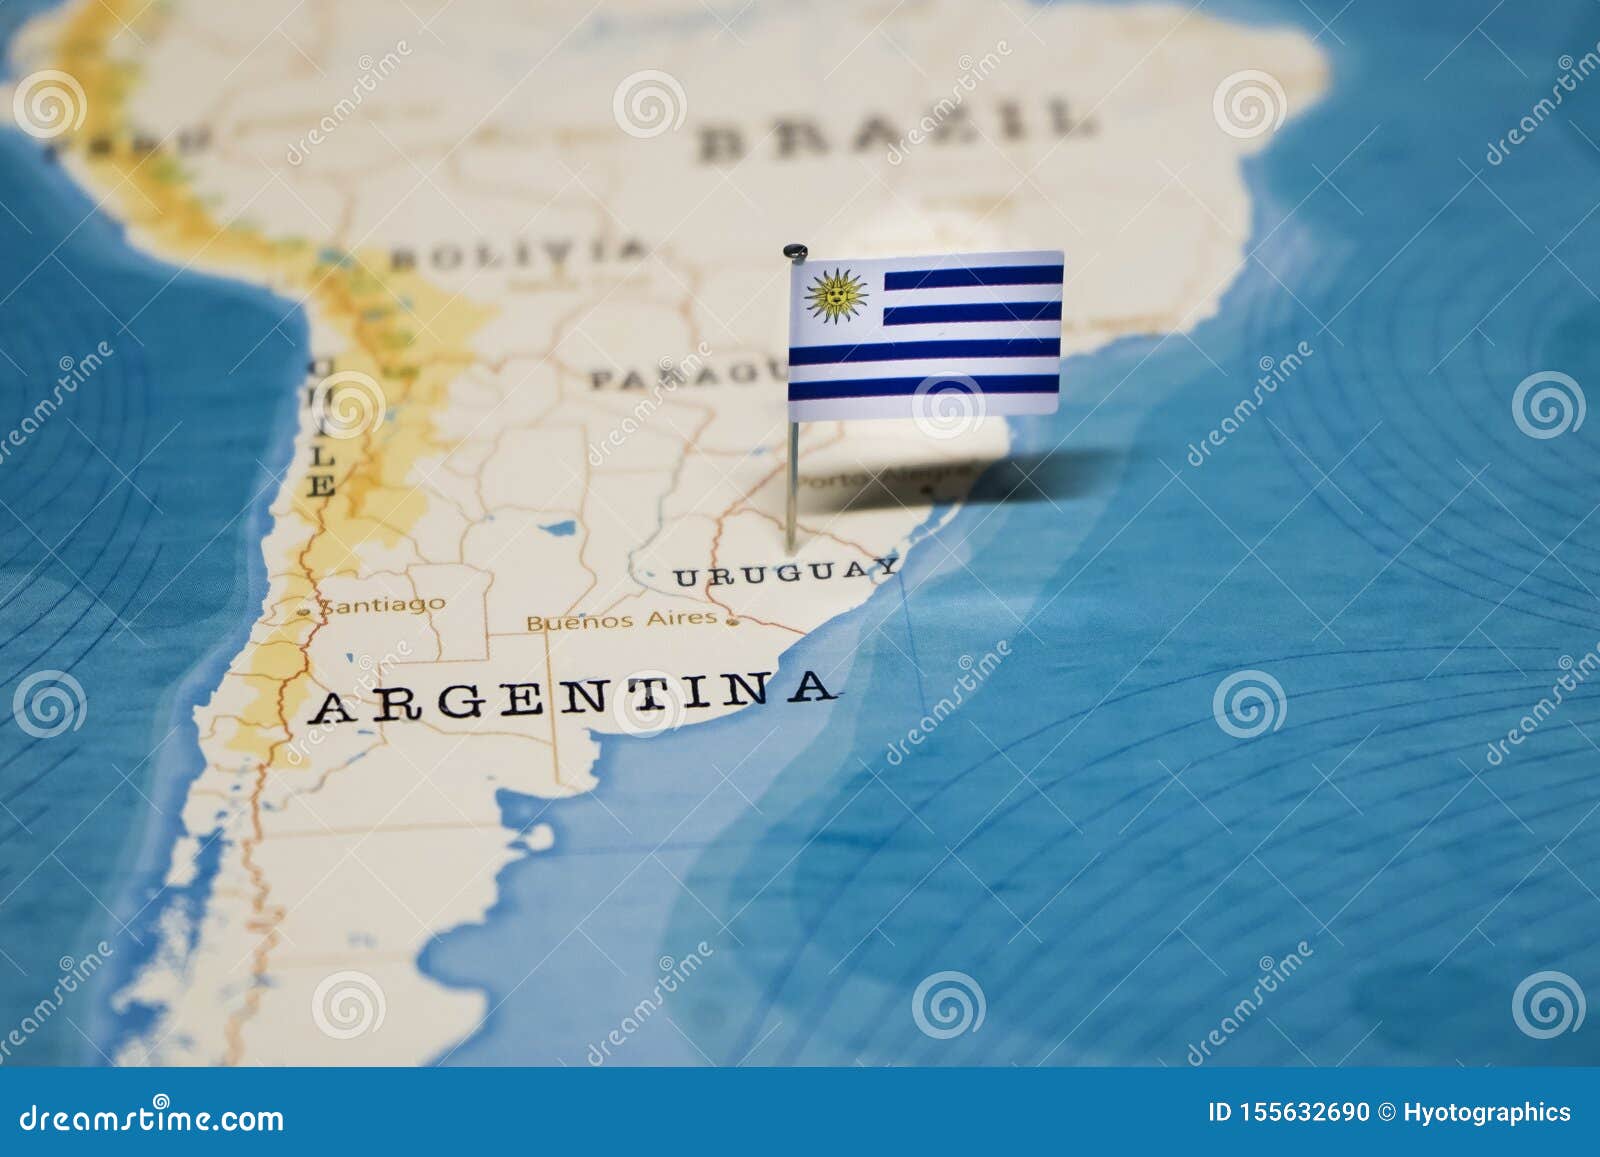 Уругвай столица на карте. Уругвай на карте с флагом. Уругвай на карте. Уругвай географическое положение.